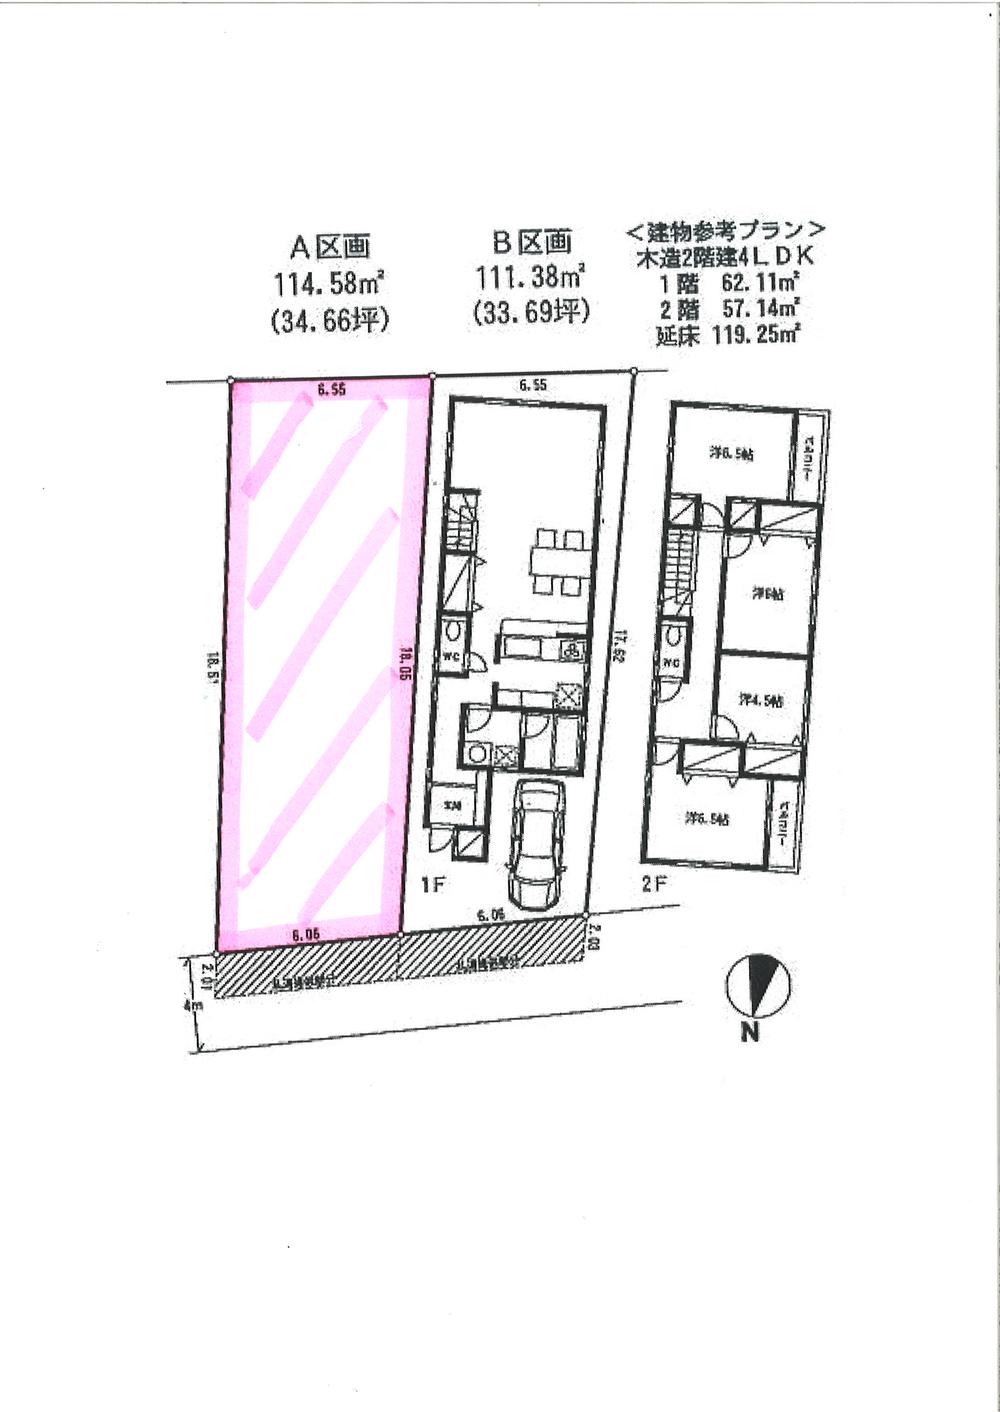 Compartment figure. Land price 68,800,000 yen, Land area 114.58 sq m compartment view